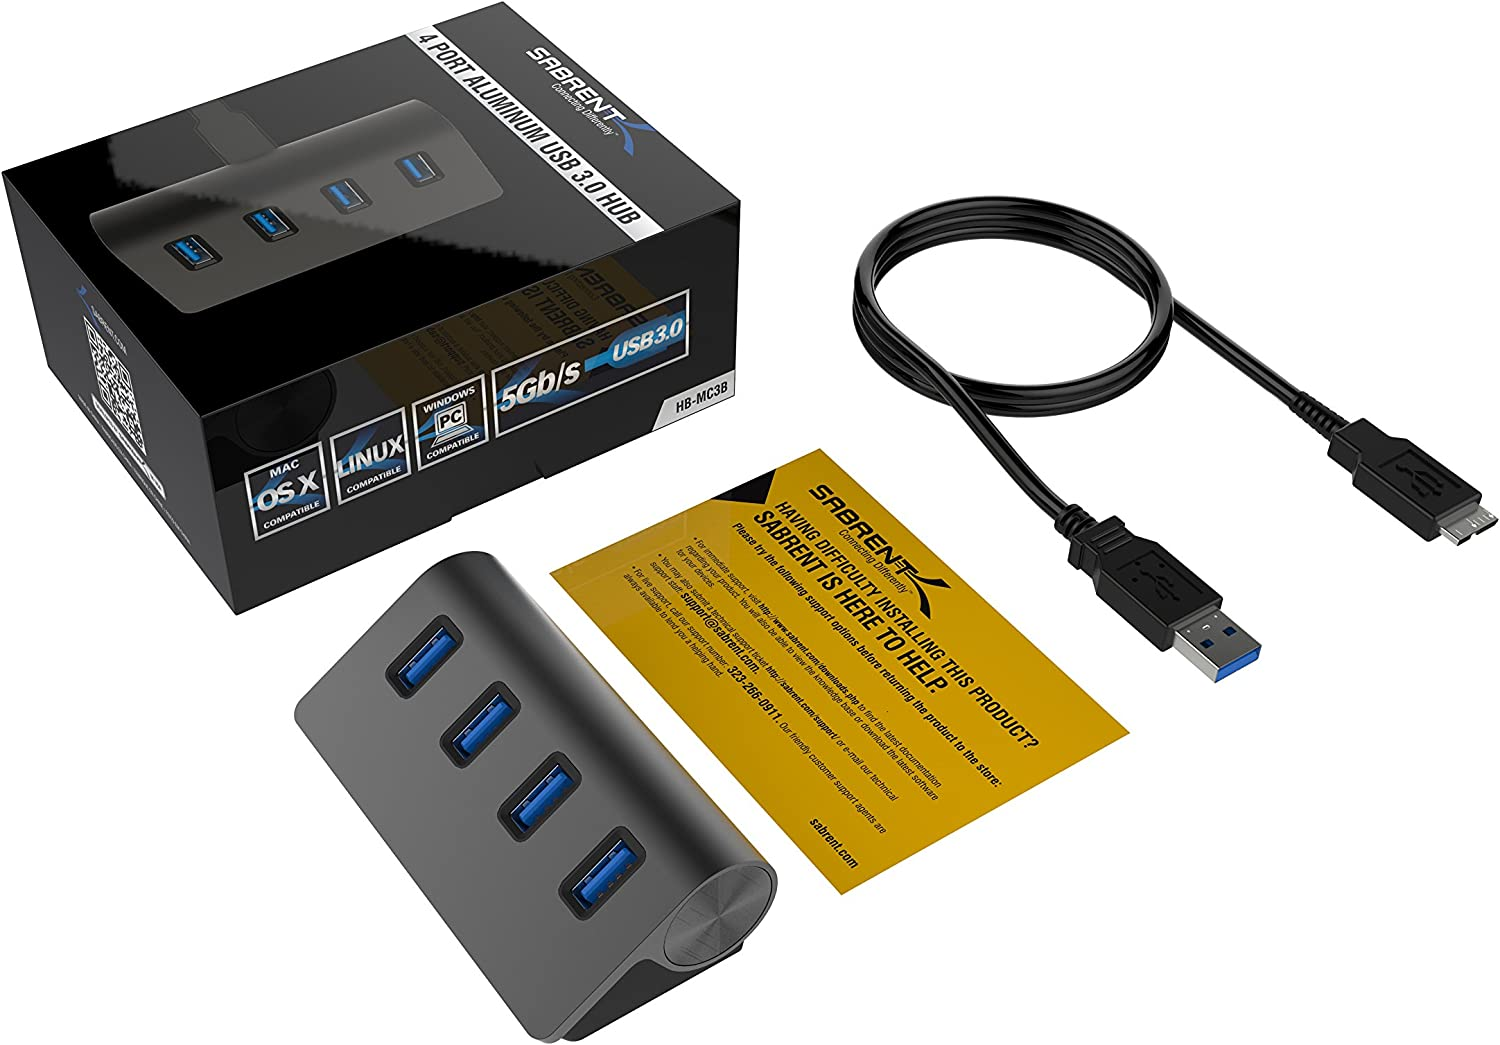 SABRENT 4-Port USB 3.0 Hub Aluminum Portable Data Hub with 2.5ft USB 3.0 Cable for iMac, MacBook, MacBook Pro, MacBook Air, Mac Mini, or Any PC [Black] (HB-MC3B)